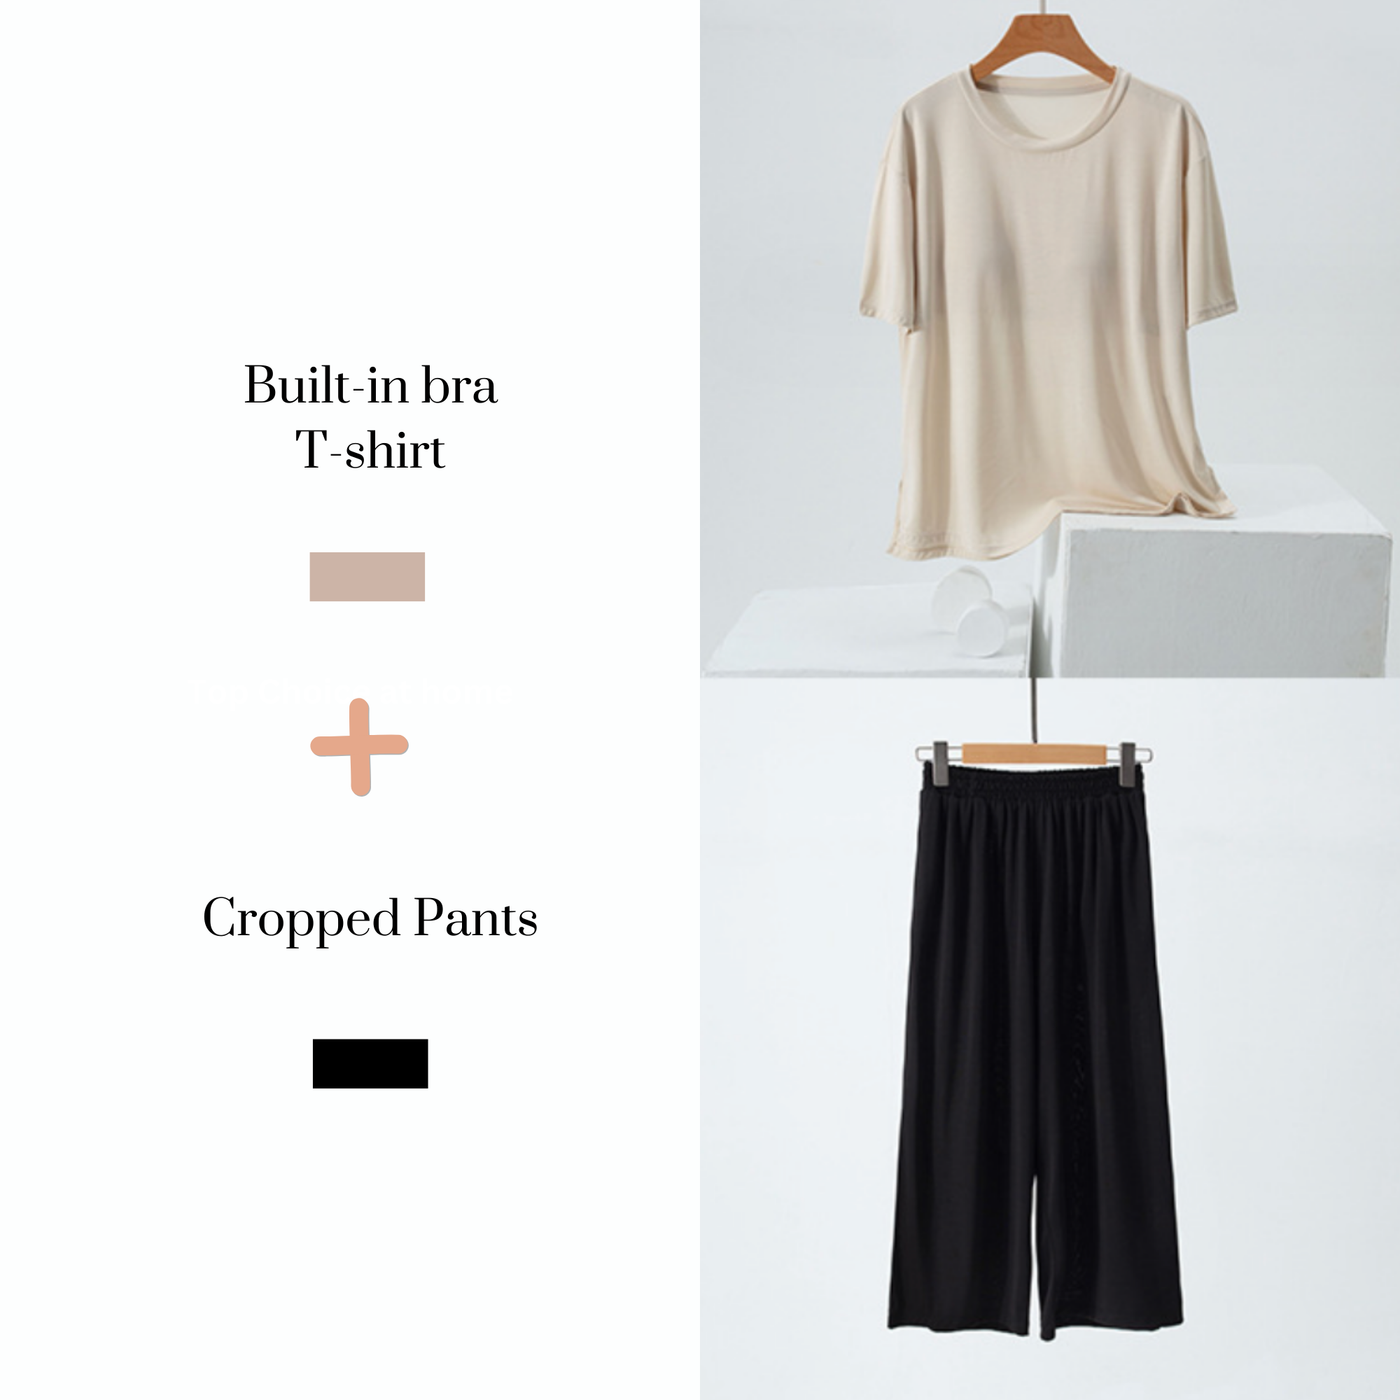 DrifWoo Sleepwear with Bra Top for Women's Comfort Nightwear Set: M-L / Beige+Black - Simple Good